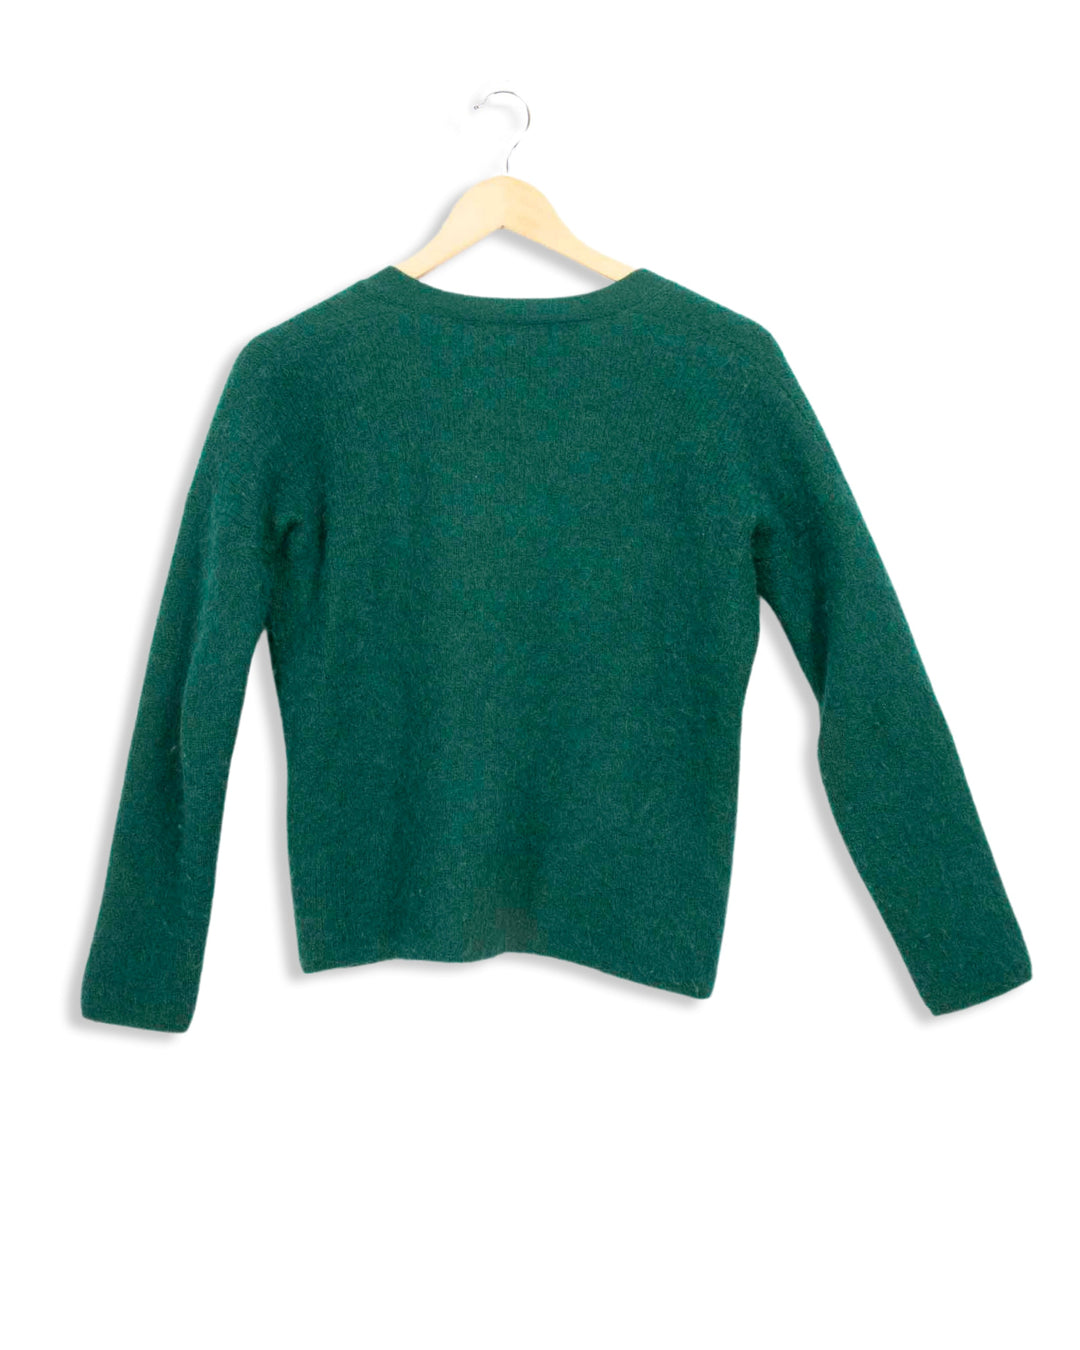 Sézane knit sweater - S